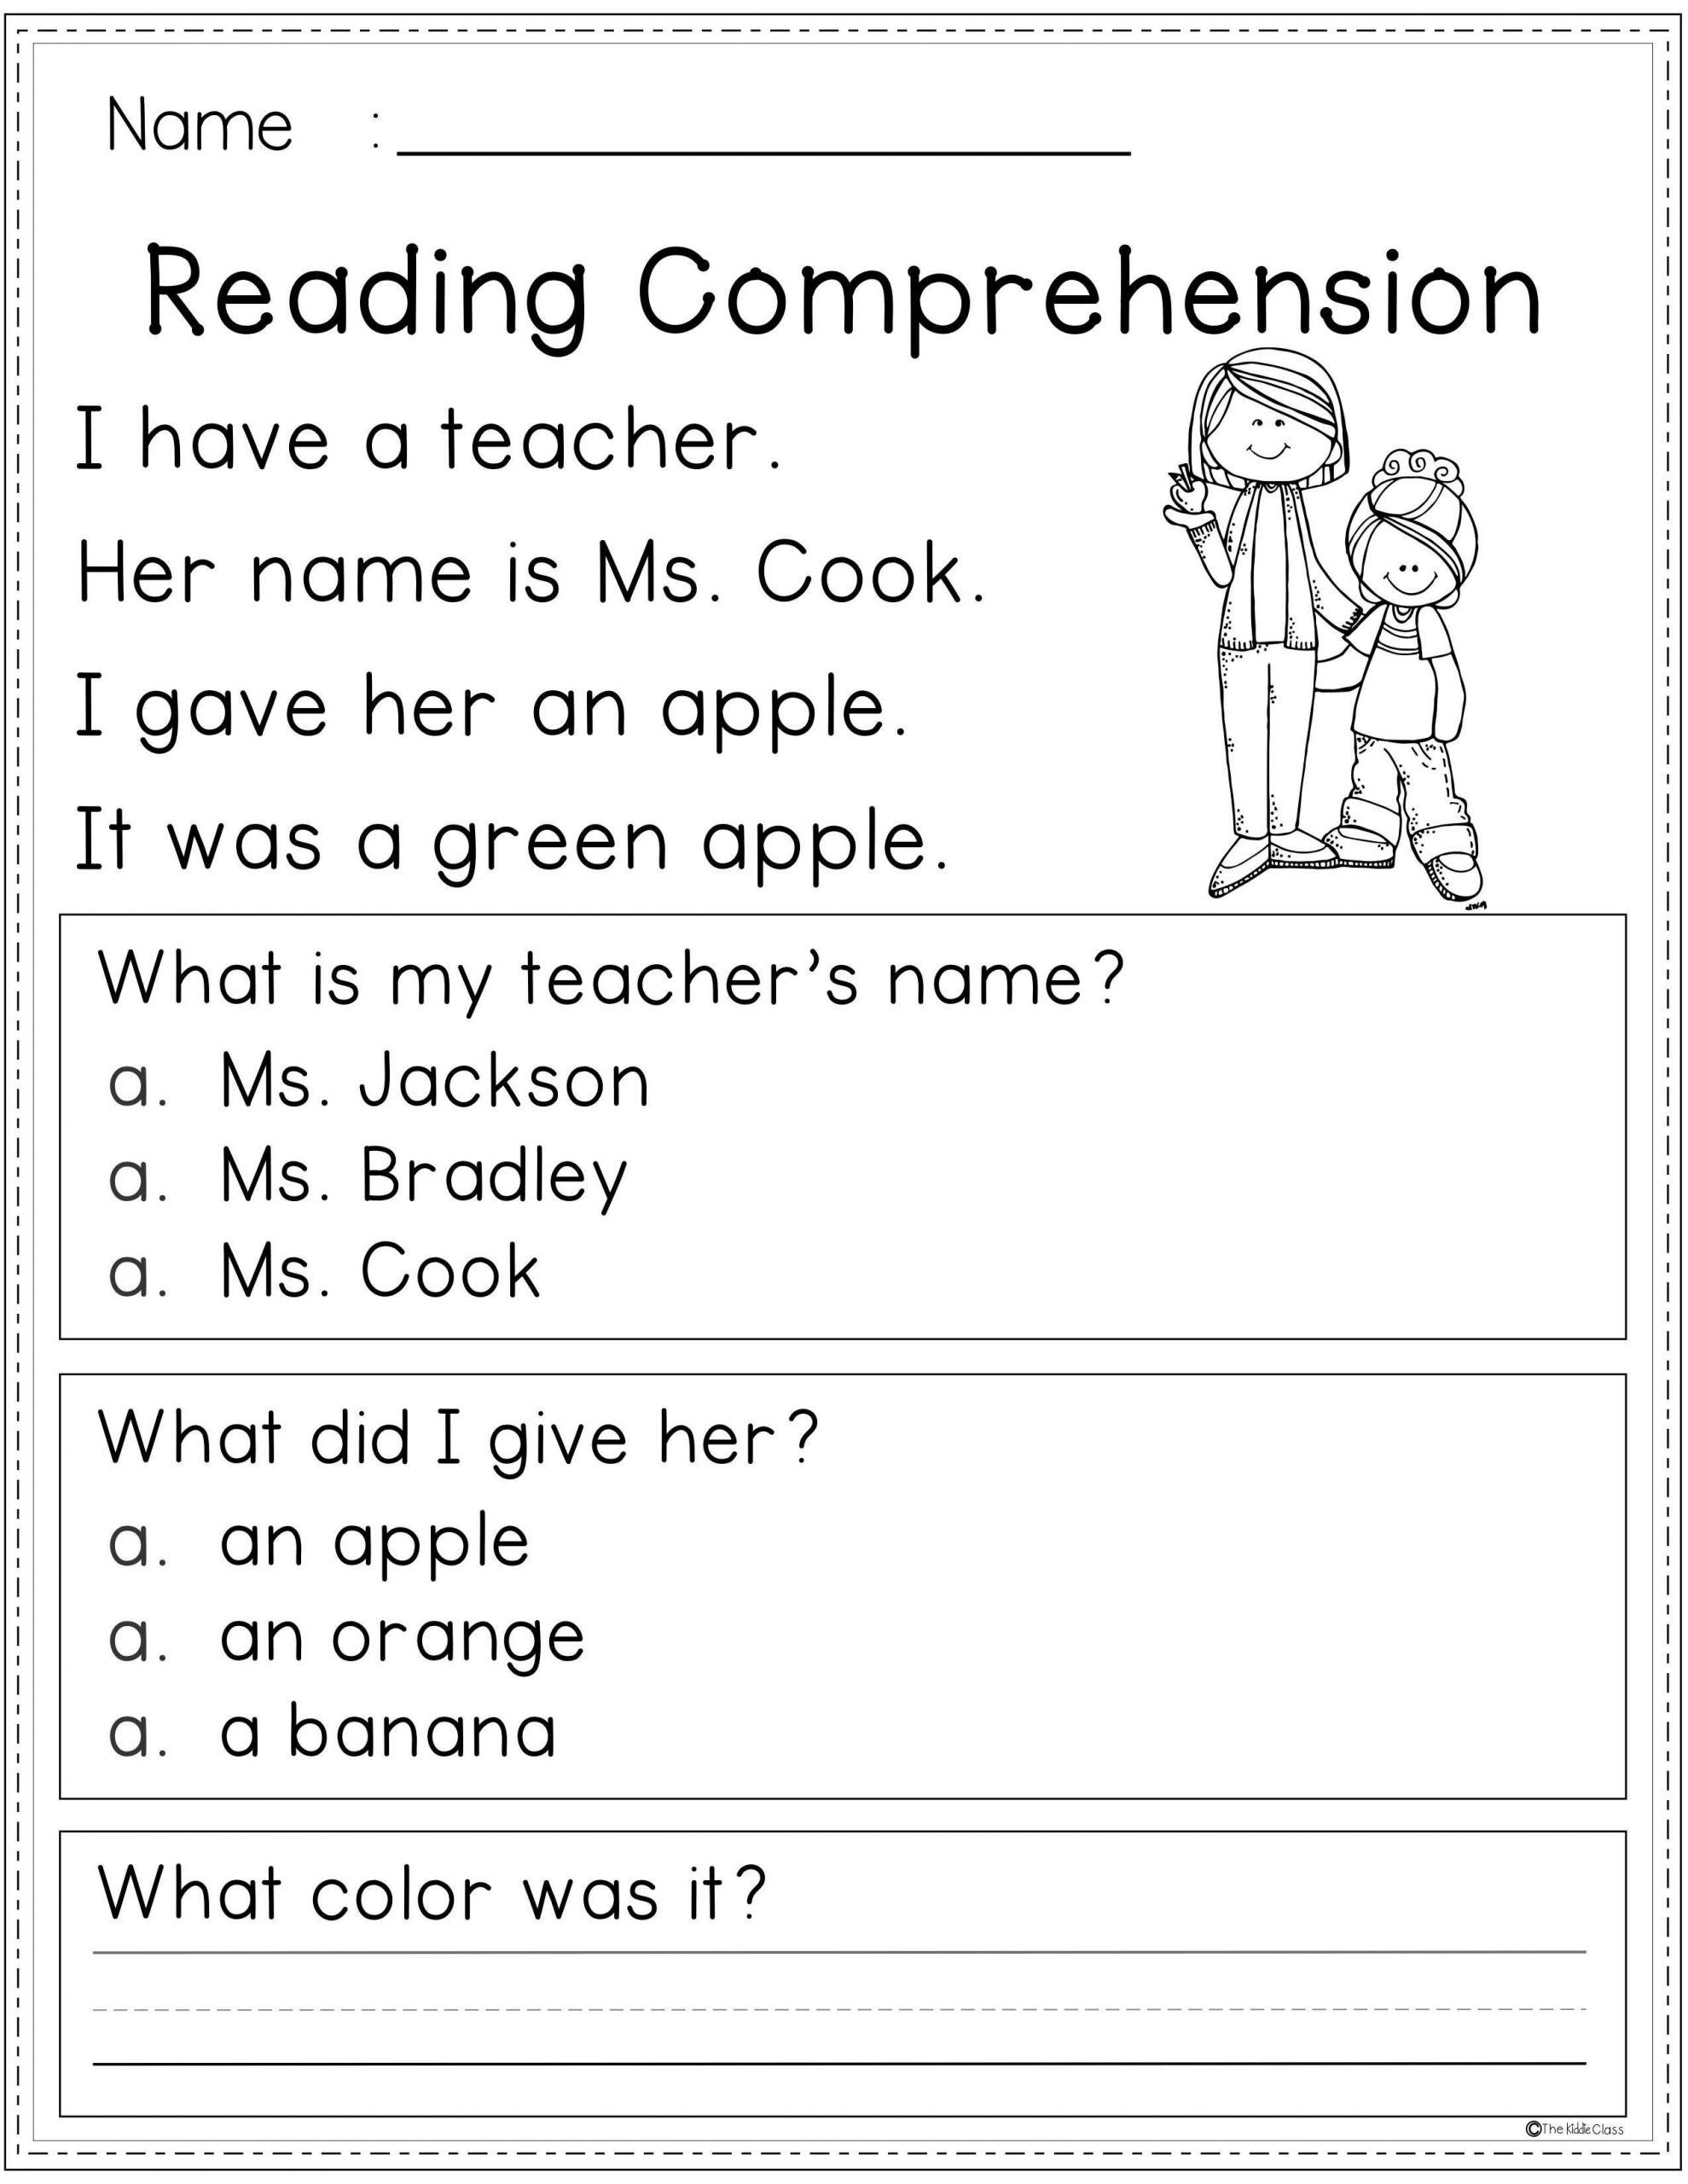 free-2nd-grade-reading-comprehension-worksheets-reading-comprehension-worksheets